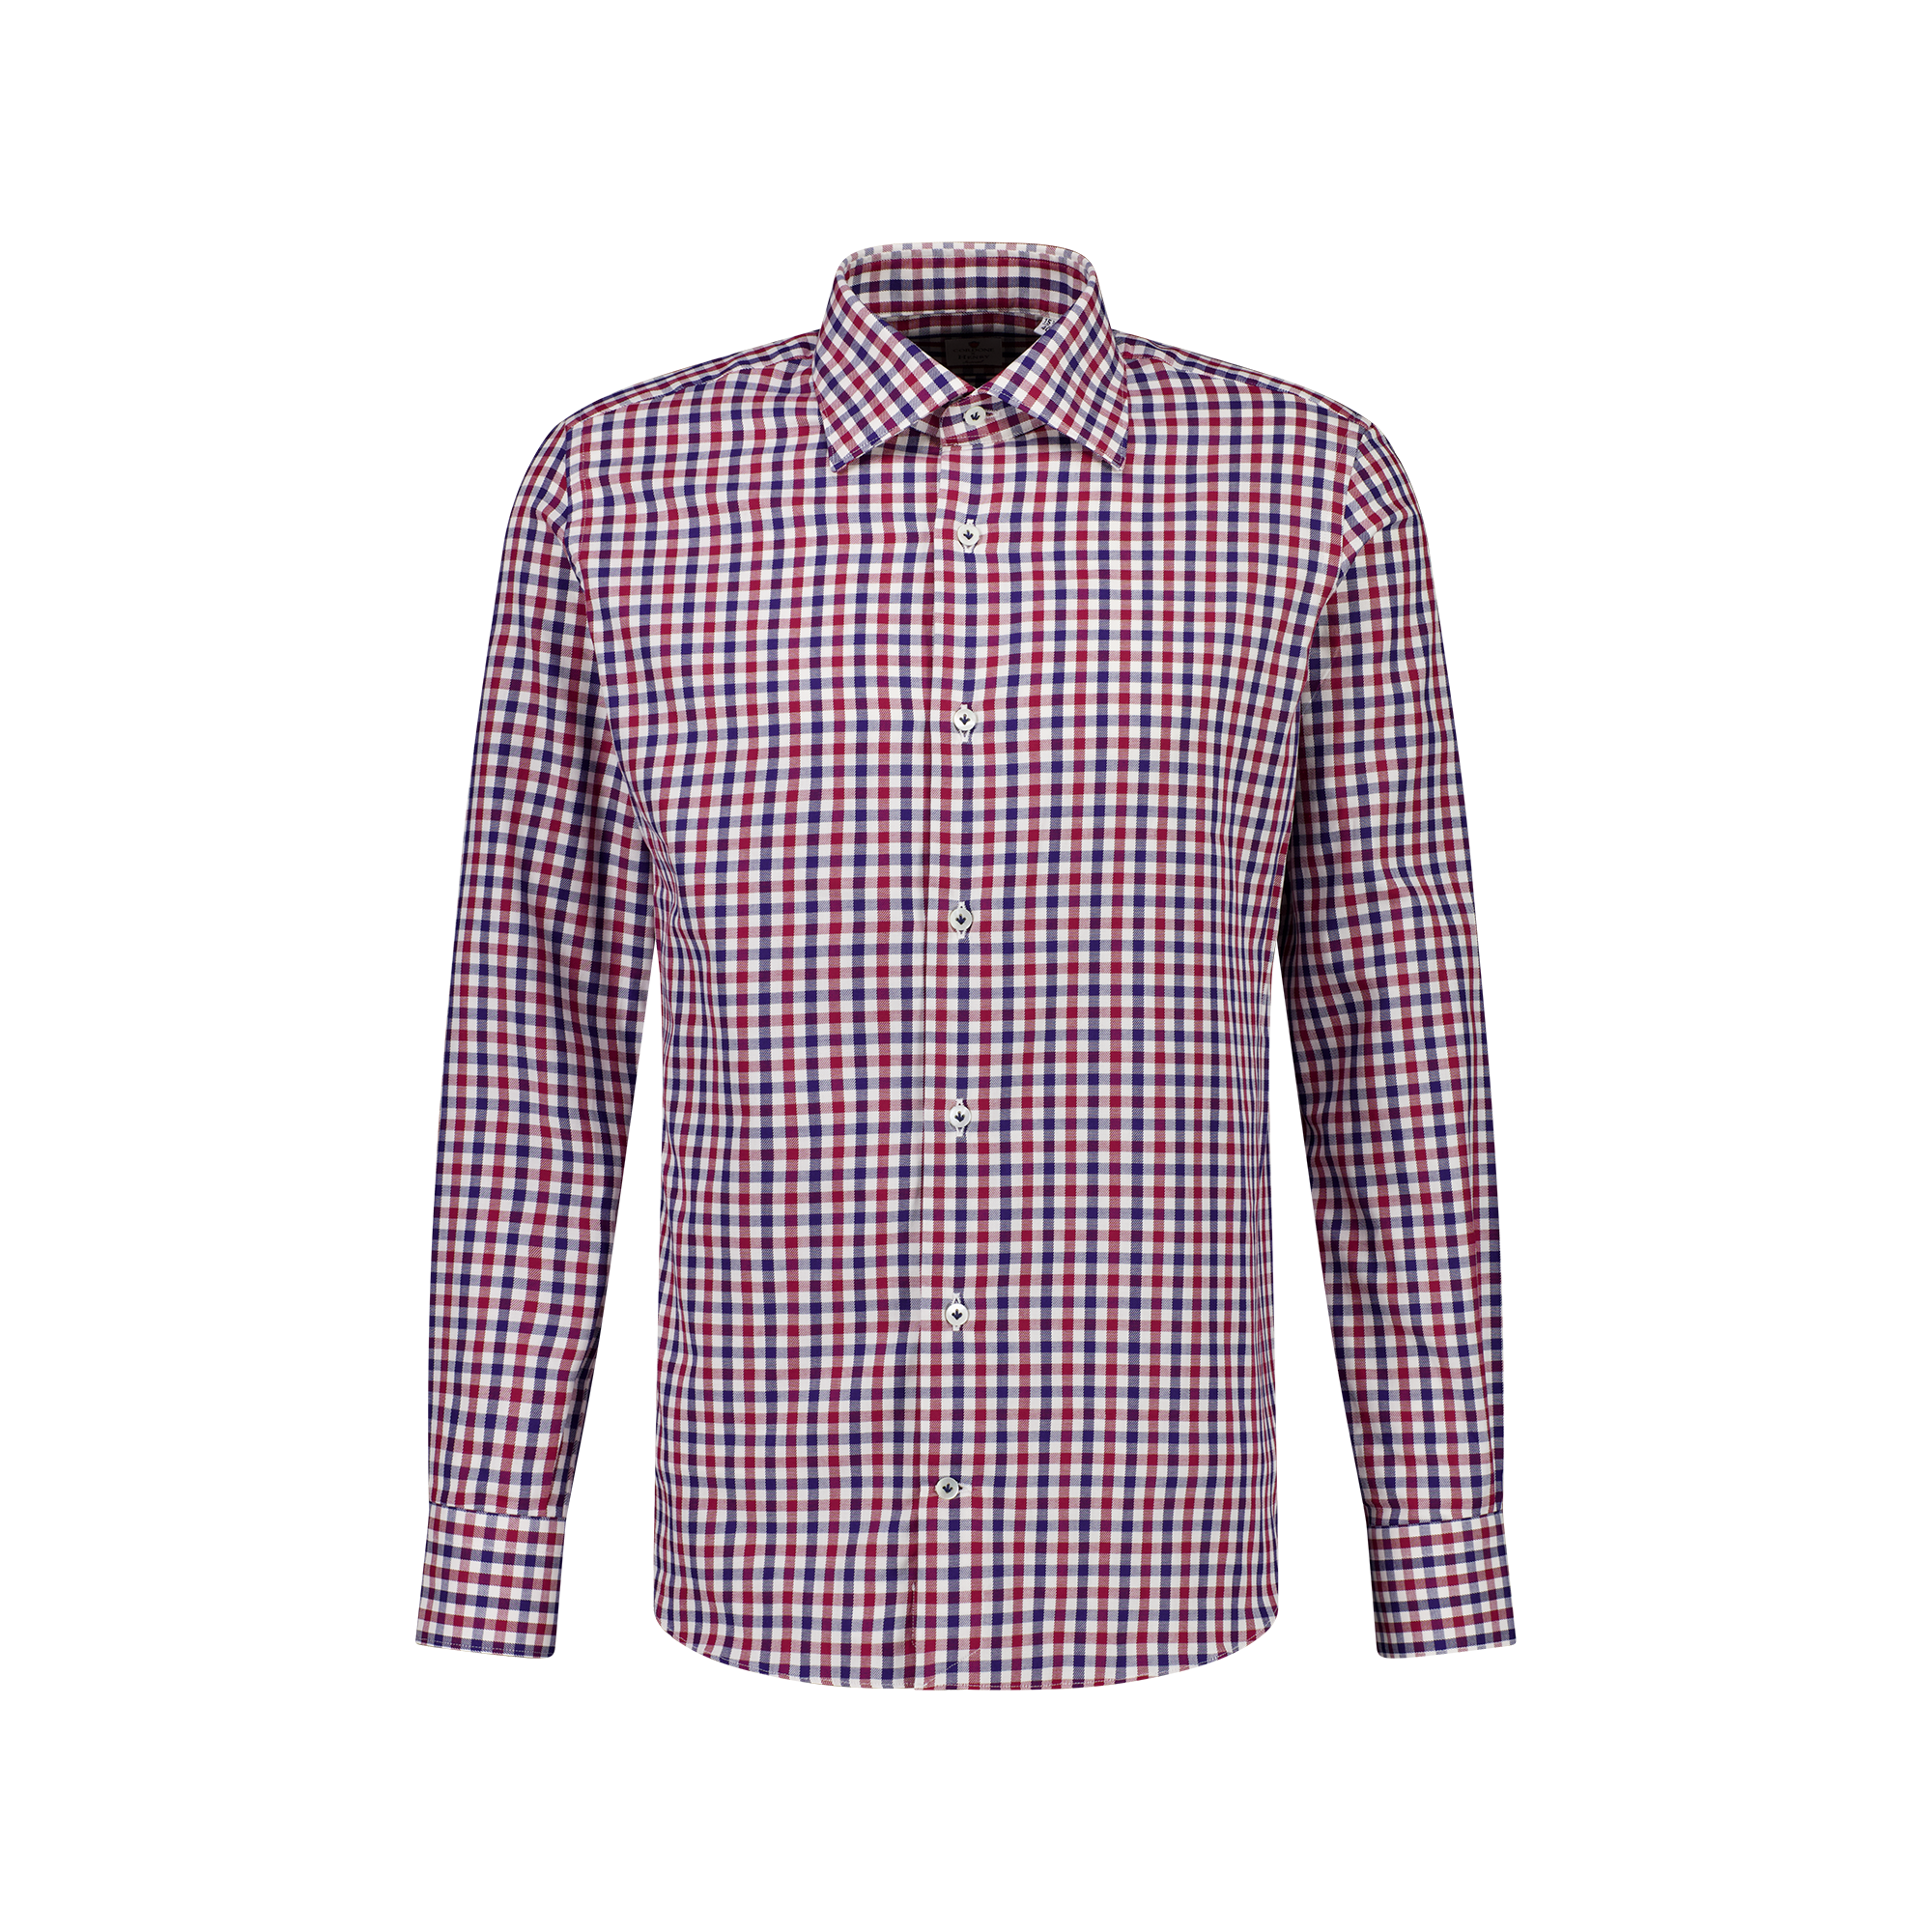 CORDONE Elegance Check Shirt NAVY/RED/MULTI